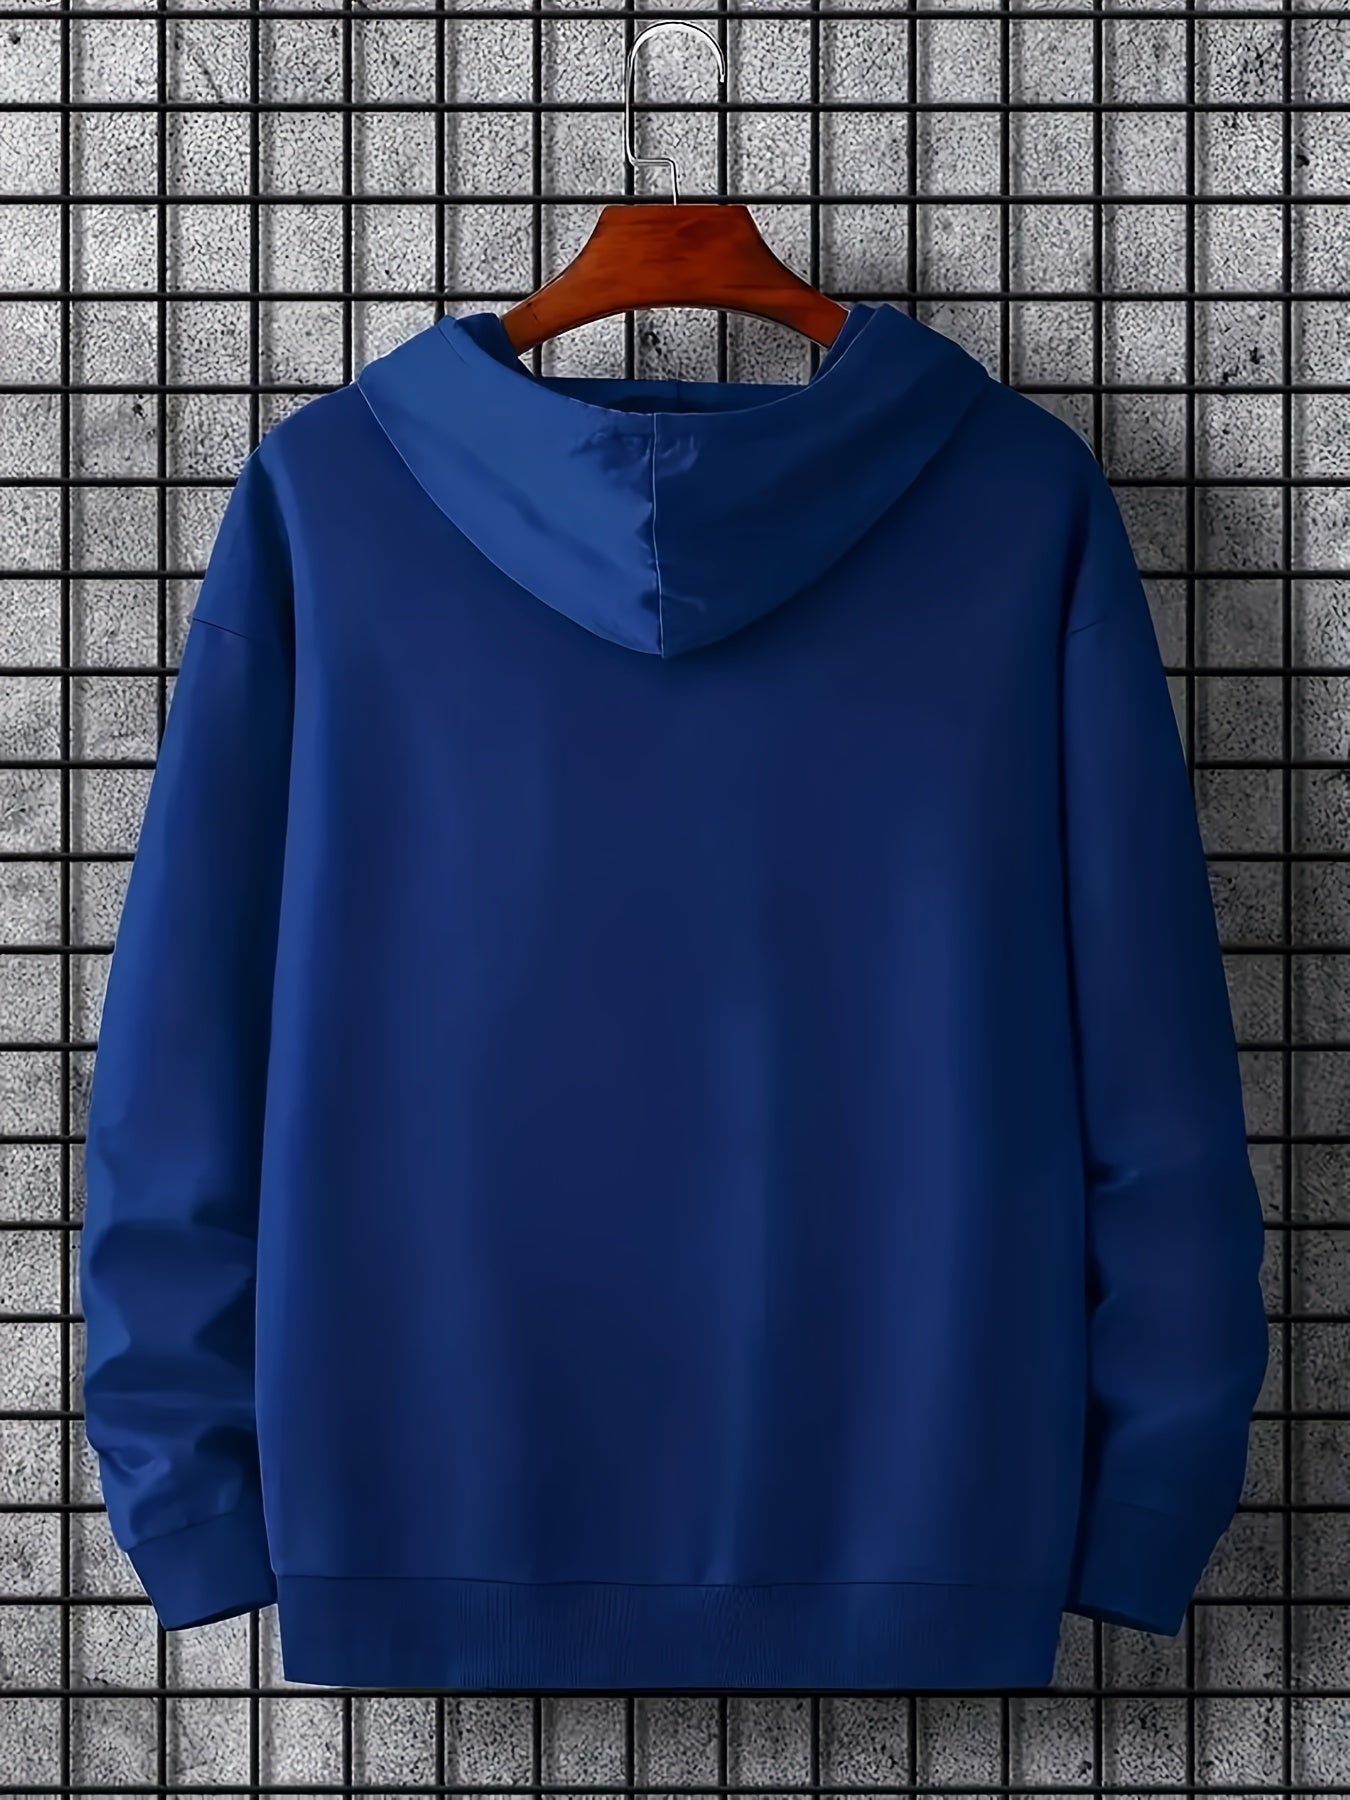 Men's Casual Graphic Design Pullover Hooded Sweatshirt With Kangaroo Pocket